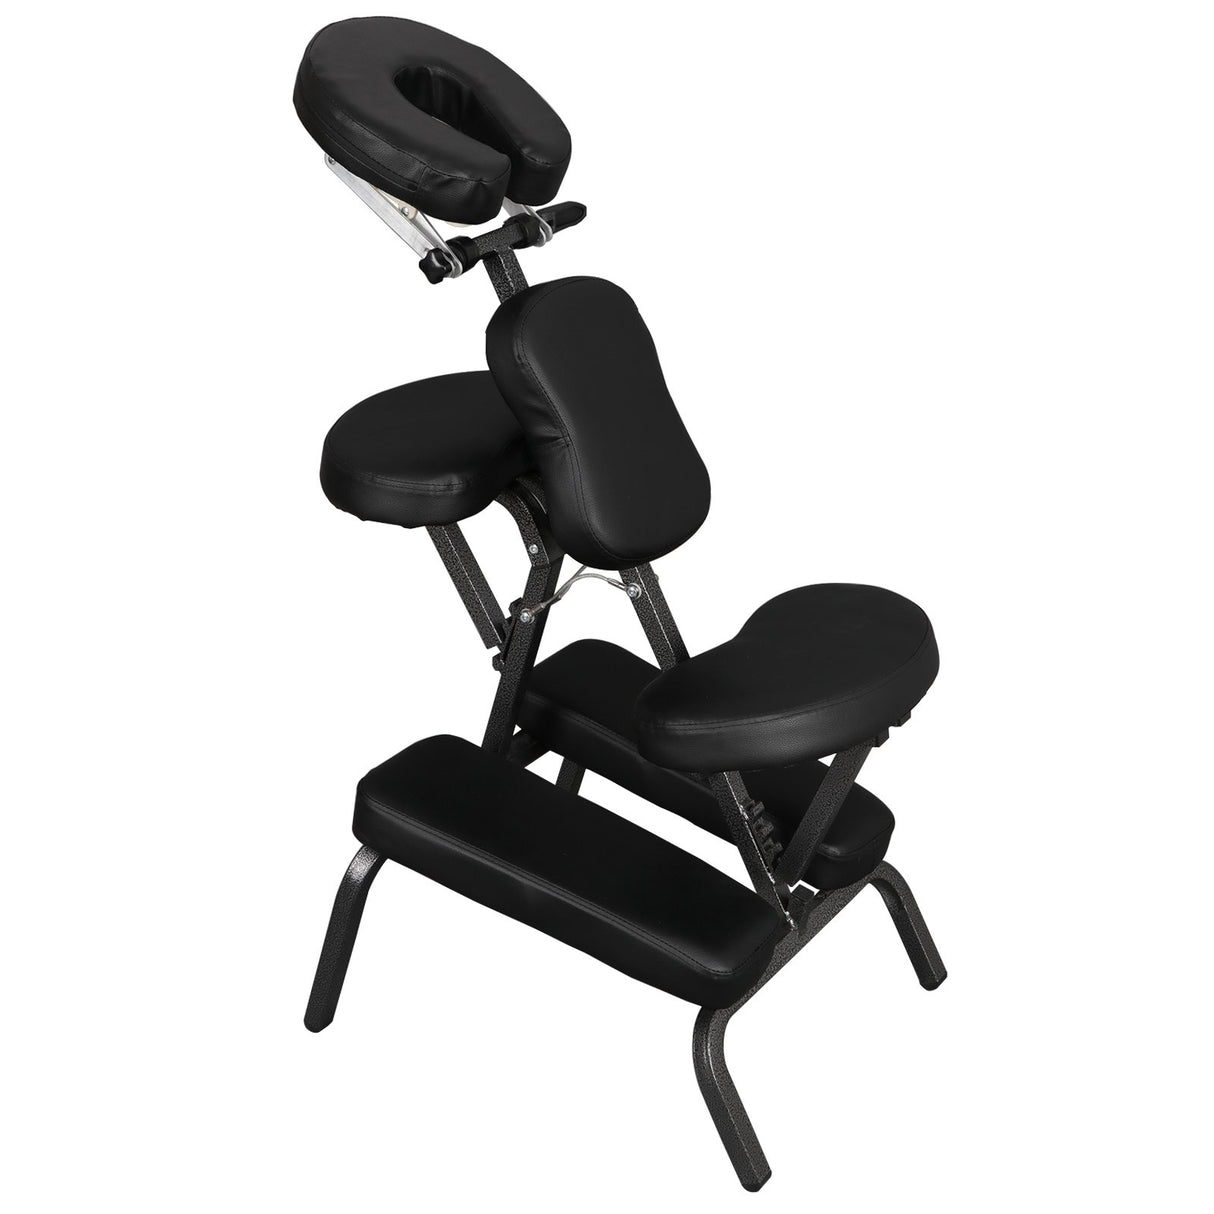 Oteymart Portable Massage Chair Foldable Tattoo Spa Chair Comfort Lightweight Foam Leather Pad Travel Massage Seat w/Carrying Bag,Black